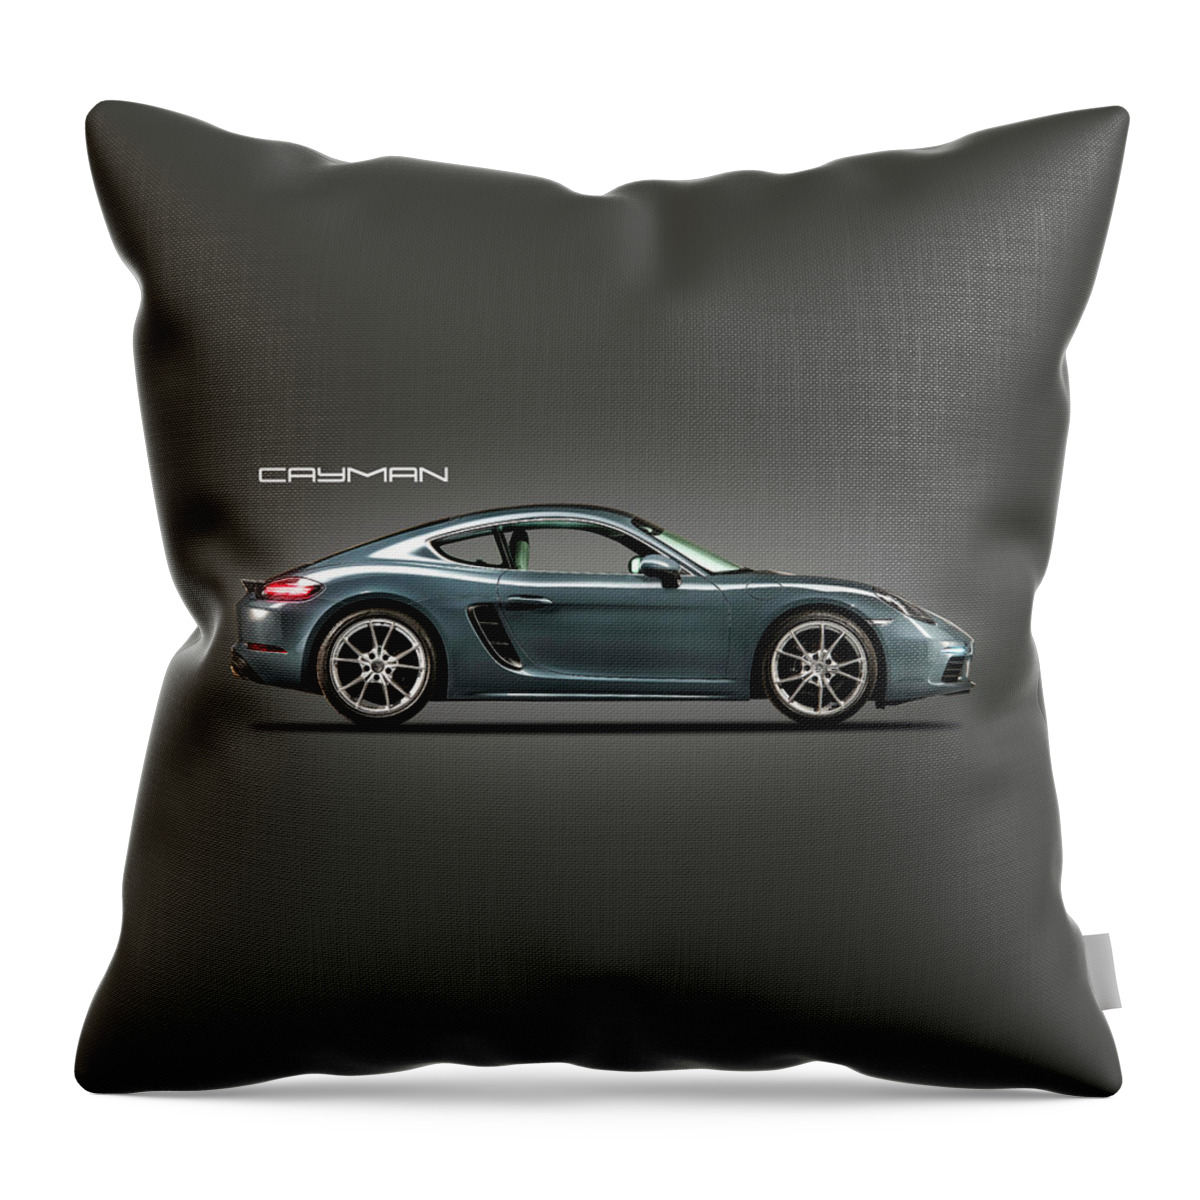 Porsche Cayman Throw Pillow featuring the photograph The Cayman by Mark Rogan